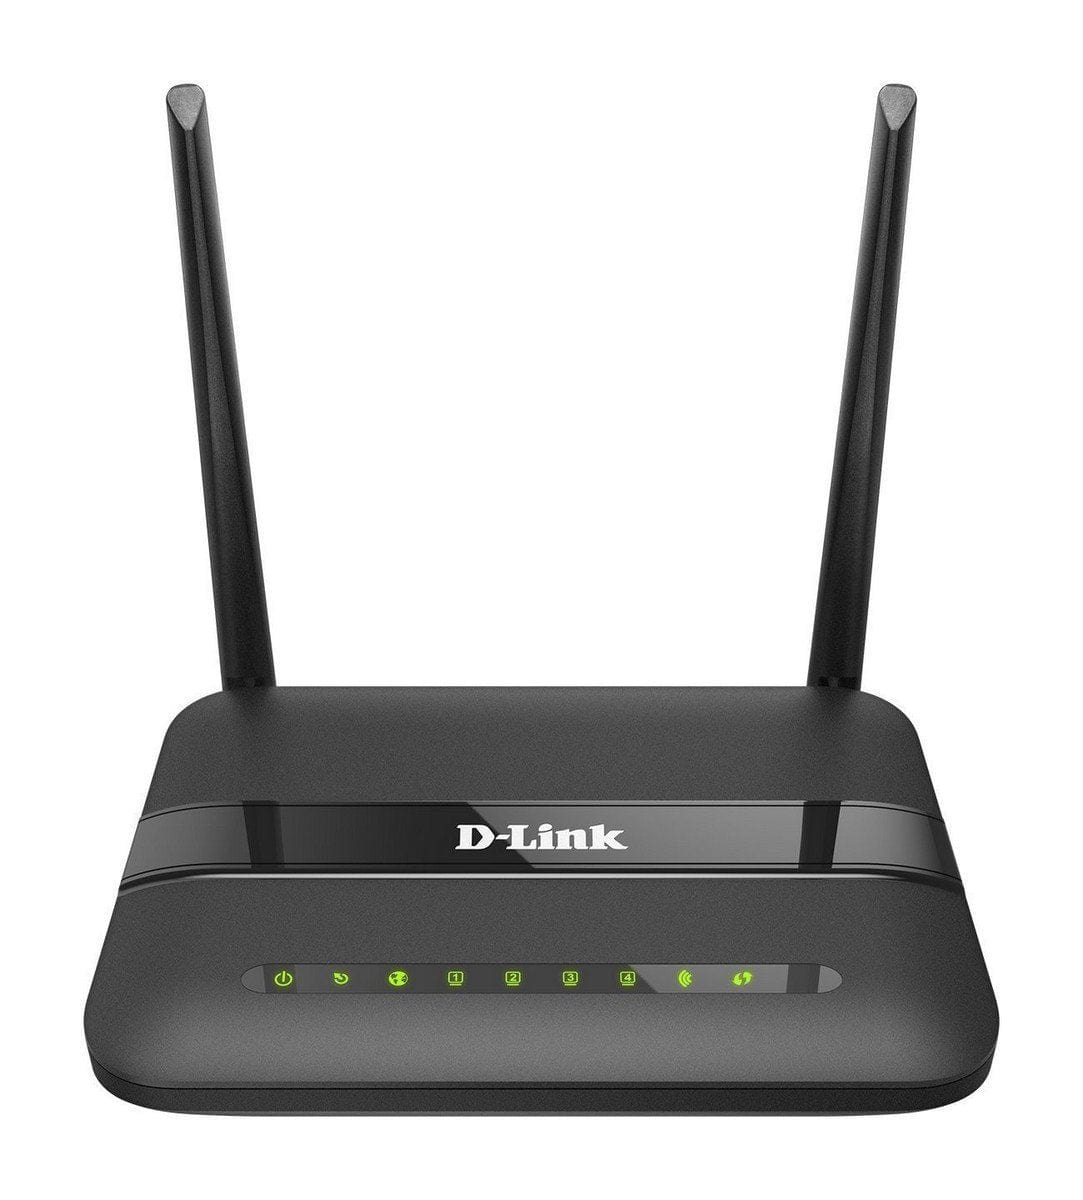 D-Link-DSL-2750U-Wireless-ADSL2-Router Networking